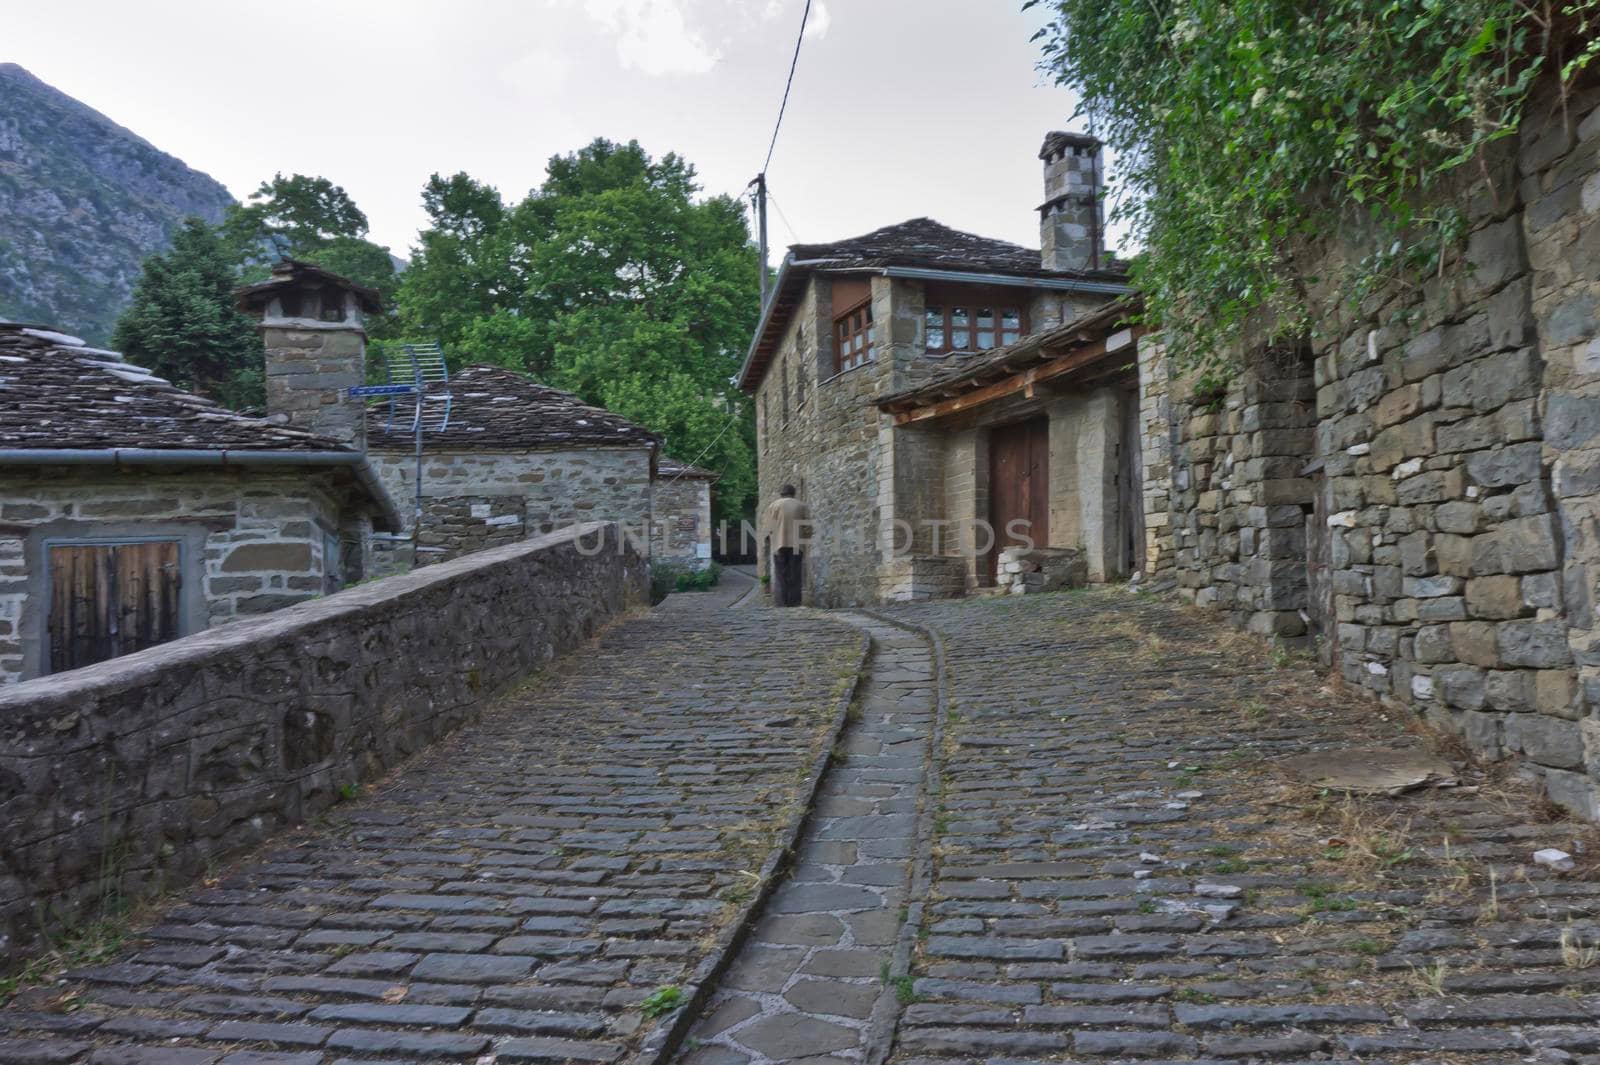 Tsepelovo Epirus, Old stone village street view, Greece, Europe by giannakisphoto